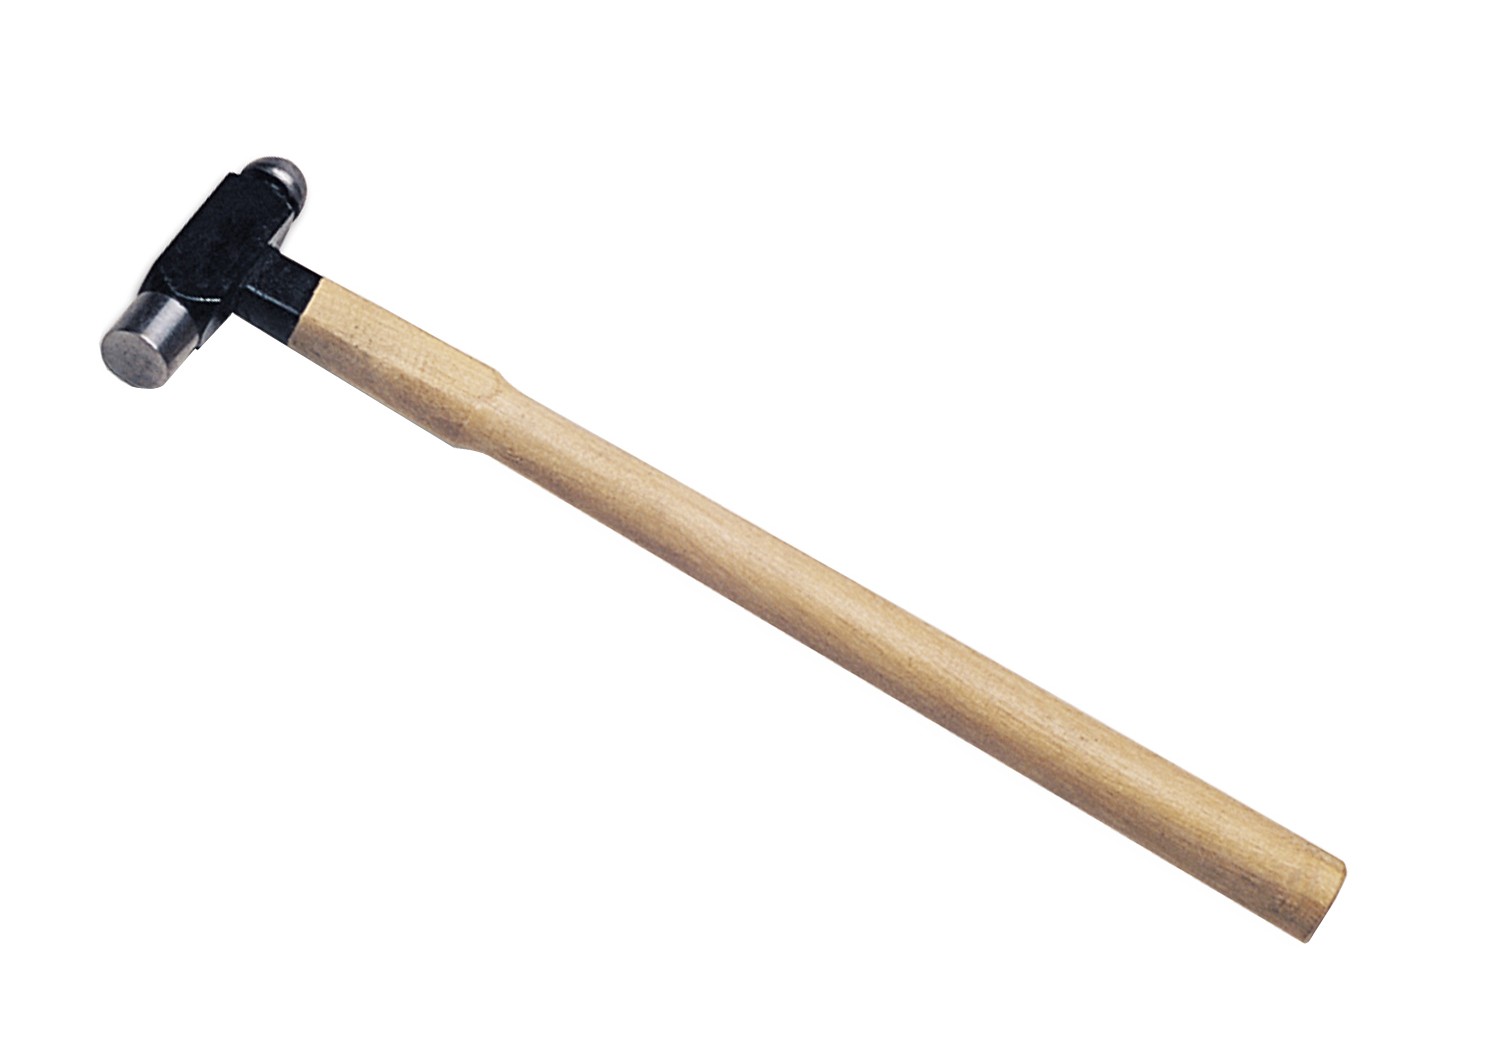 2 Oz Small Ballpein Hammer